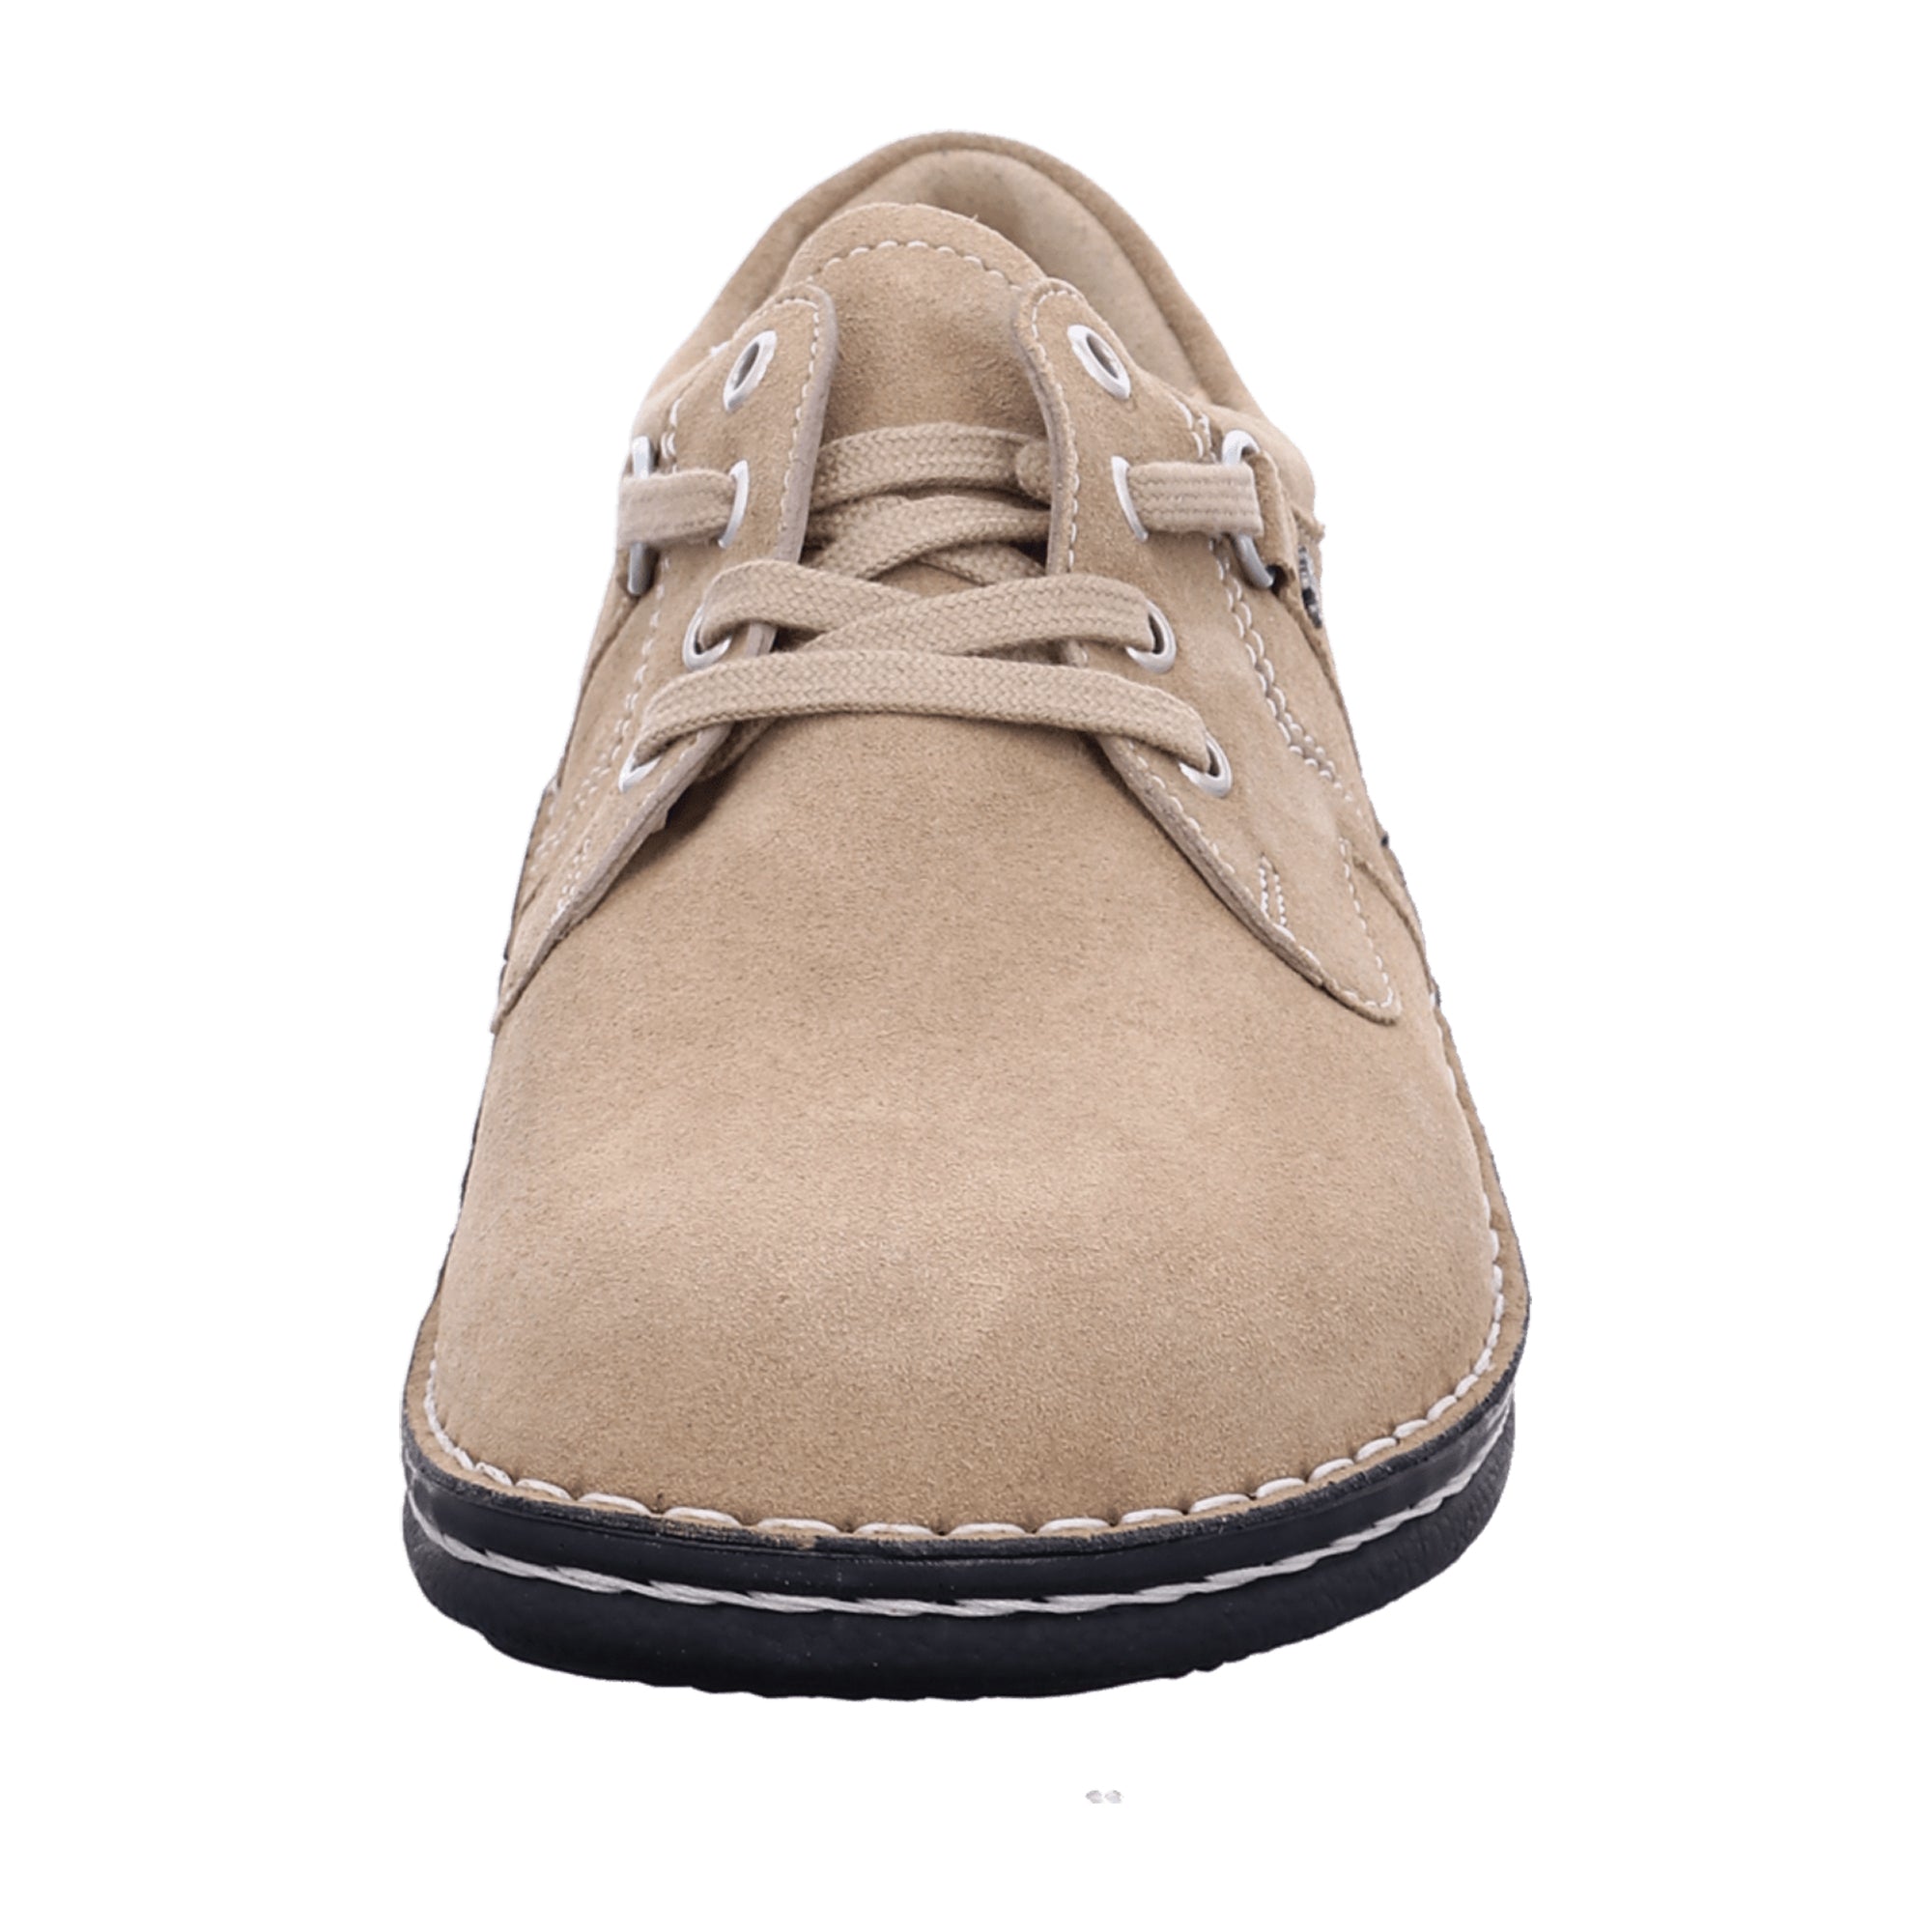 Finn Comfort Men's Orthopedic Shoes Beige 1000-735081 | Stylish & Durable